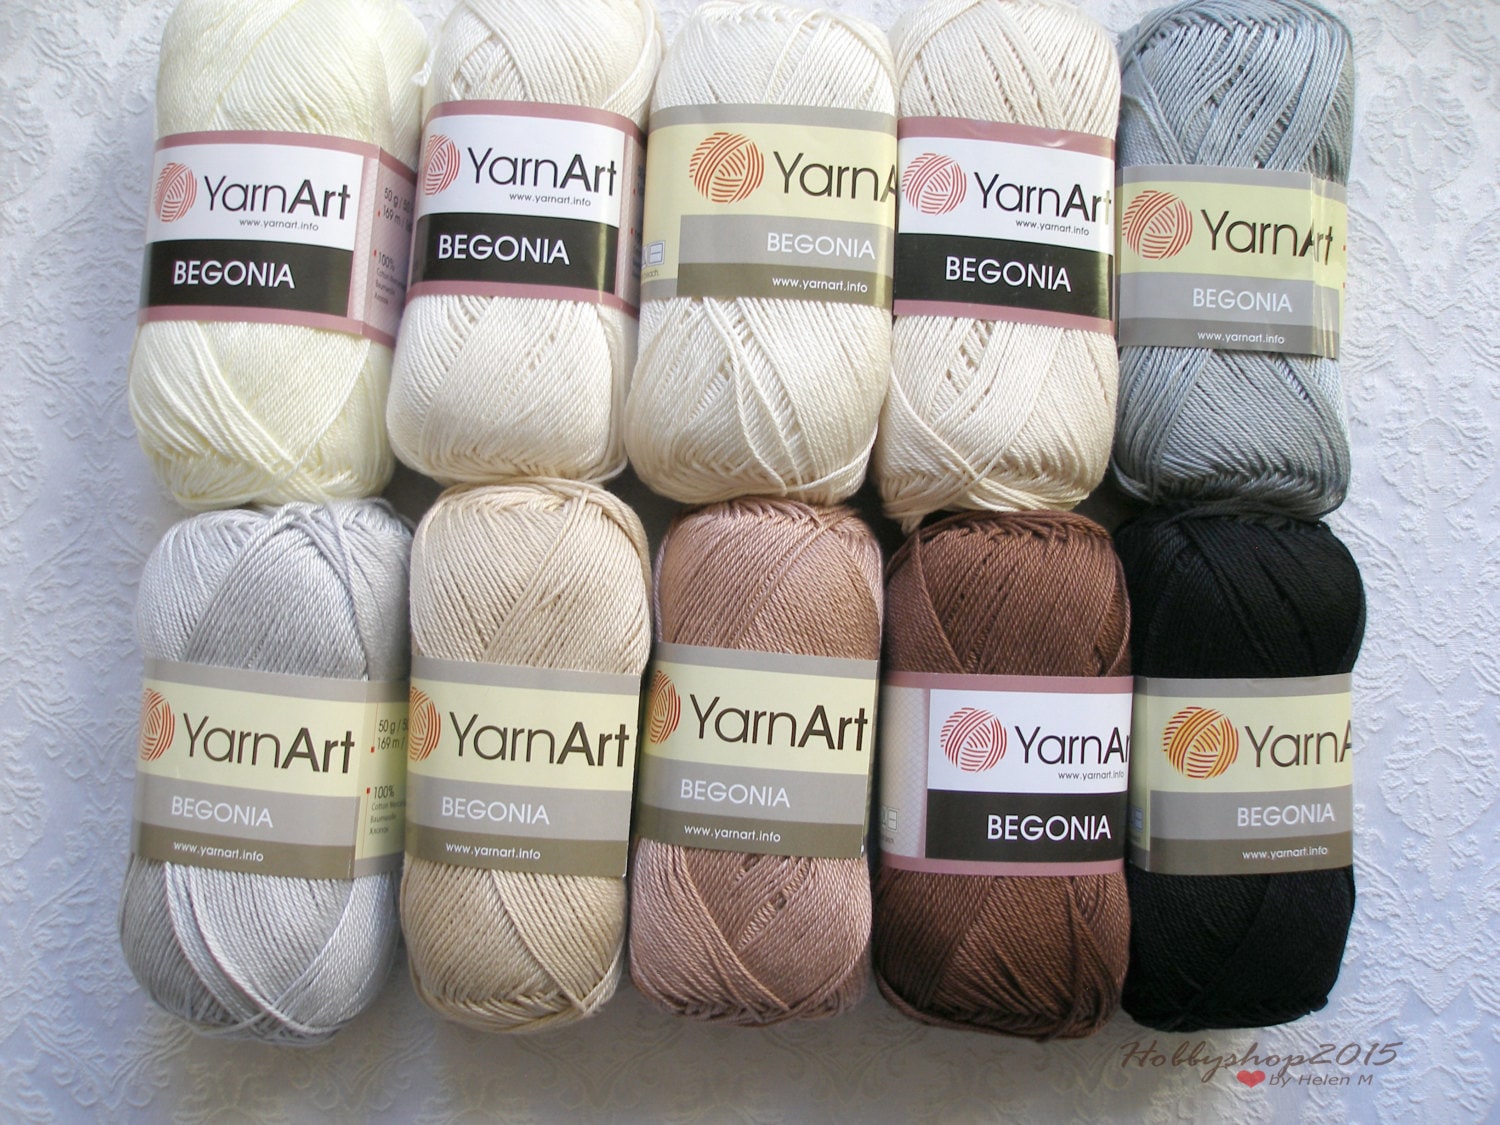 4 Balls of YarnArt Begonia Yarn Set, Mercerized Cotton Yarn, Multicolor  Crocheting Yarn, Colorful Knitting Thread, Assorted Color Yarn Set for